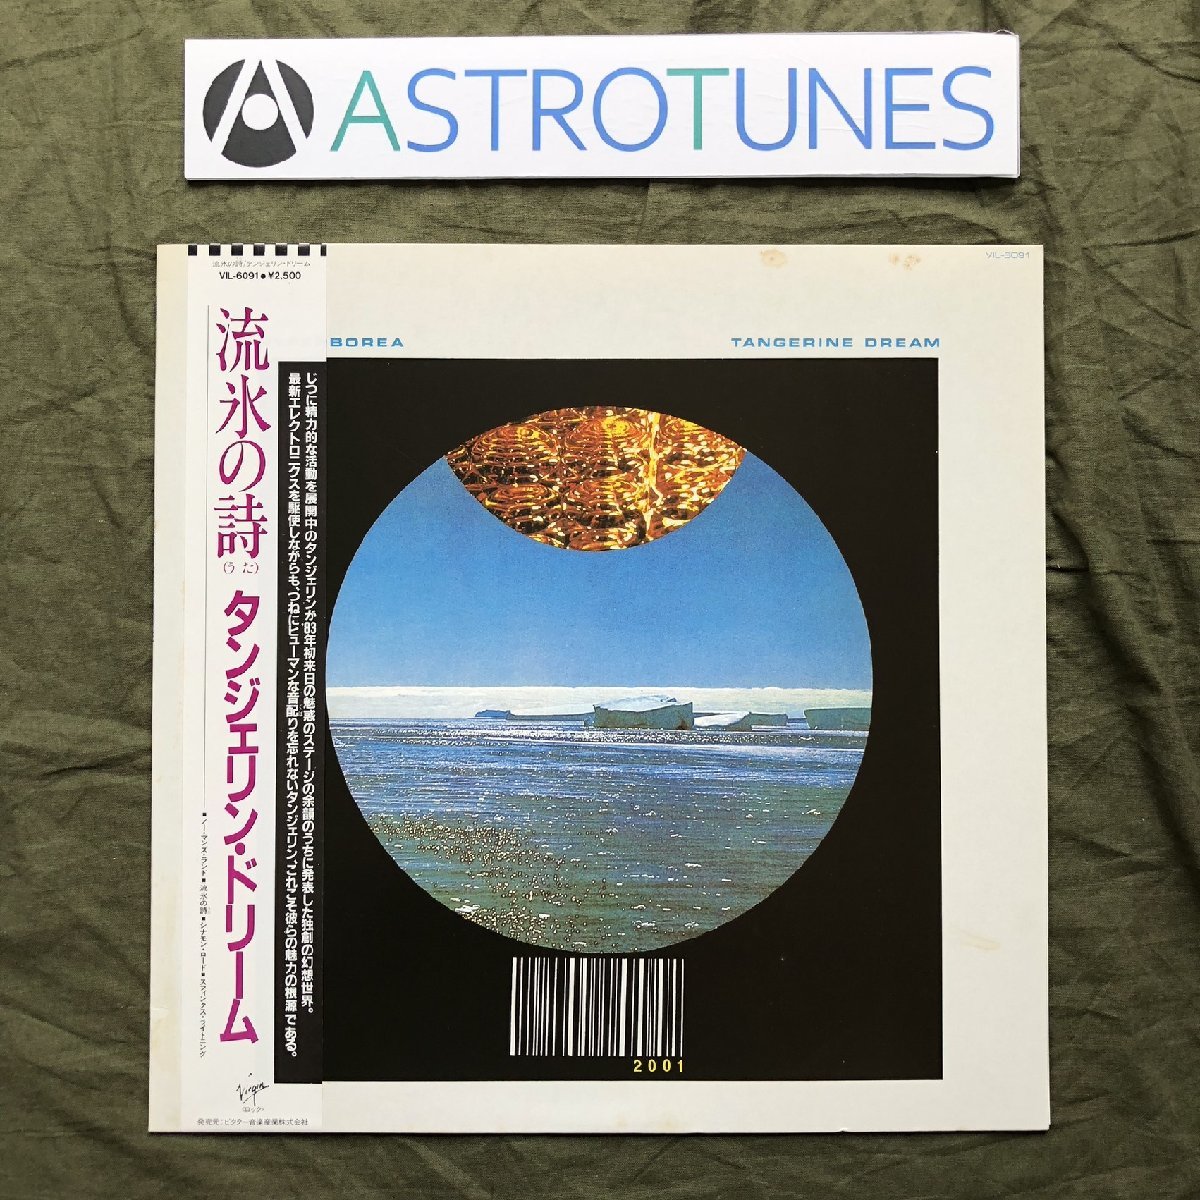  царапина нет прекрасный запись очень редкий 1984 год язык je Lynn * Dream Tangerine Dream LP запись . вода. поэзия Hyperborea с лентой Techno электро Edgar Froese